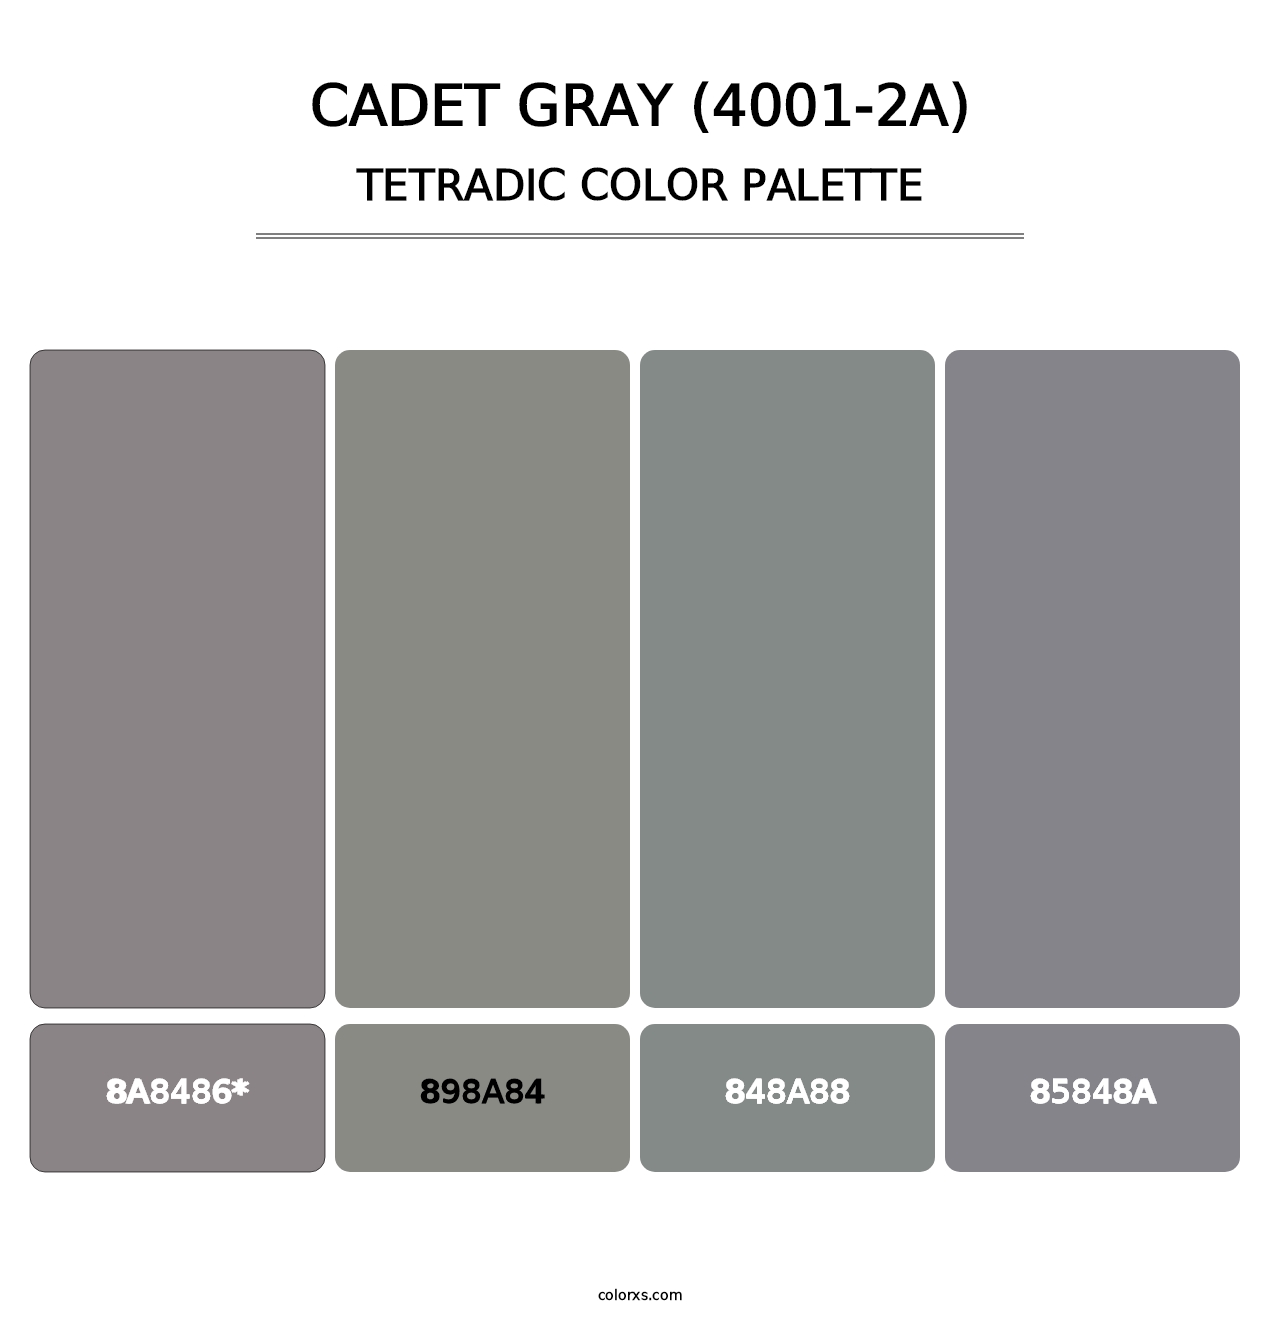 Cadet Gray (4001-2A) - Tetradic Color Palette